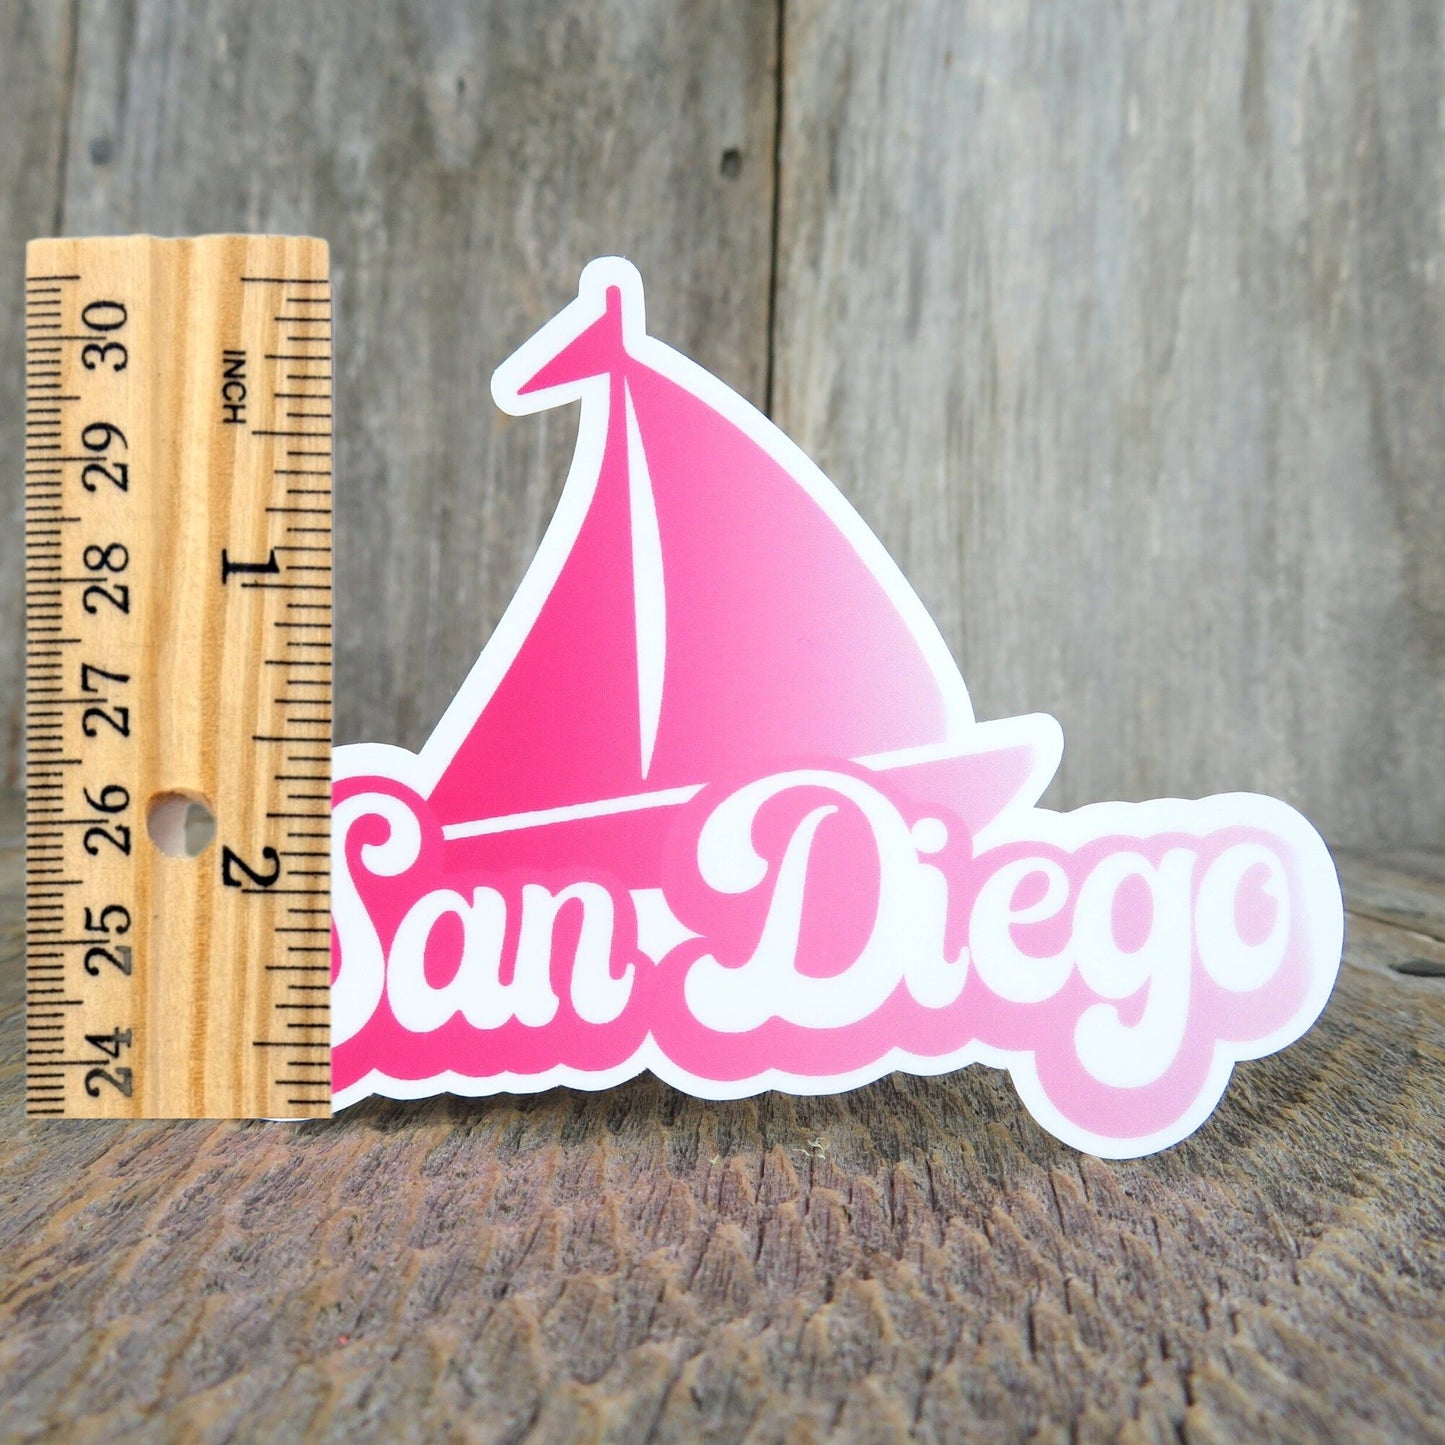 San Diego Pink Sailboat Sticker California  Souvenir Retro Bubble Letters